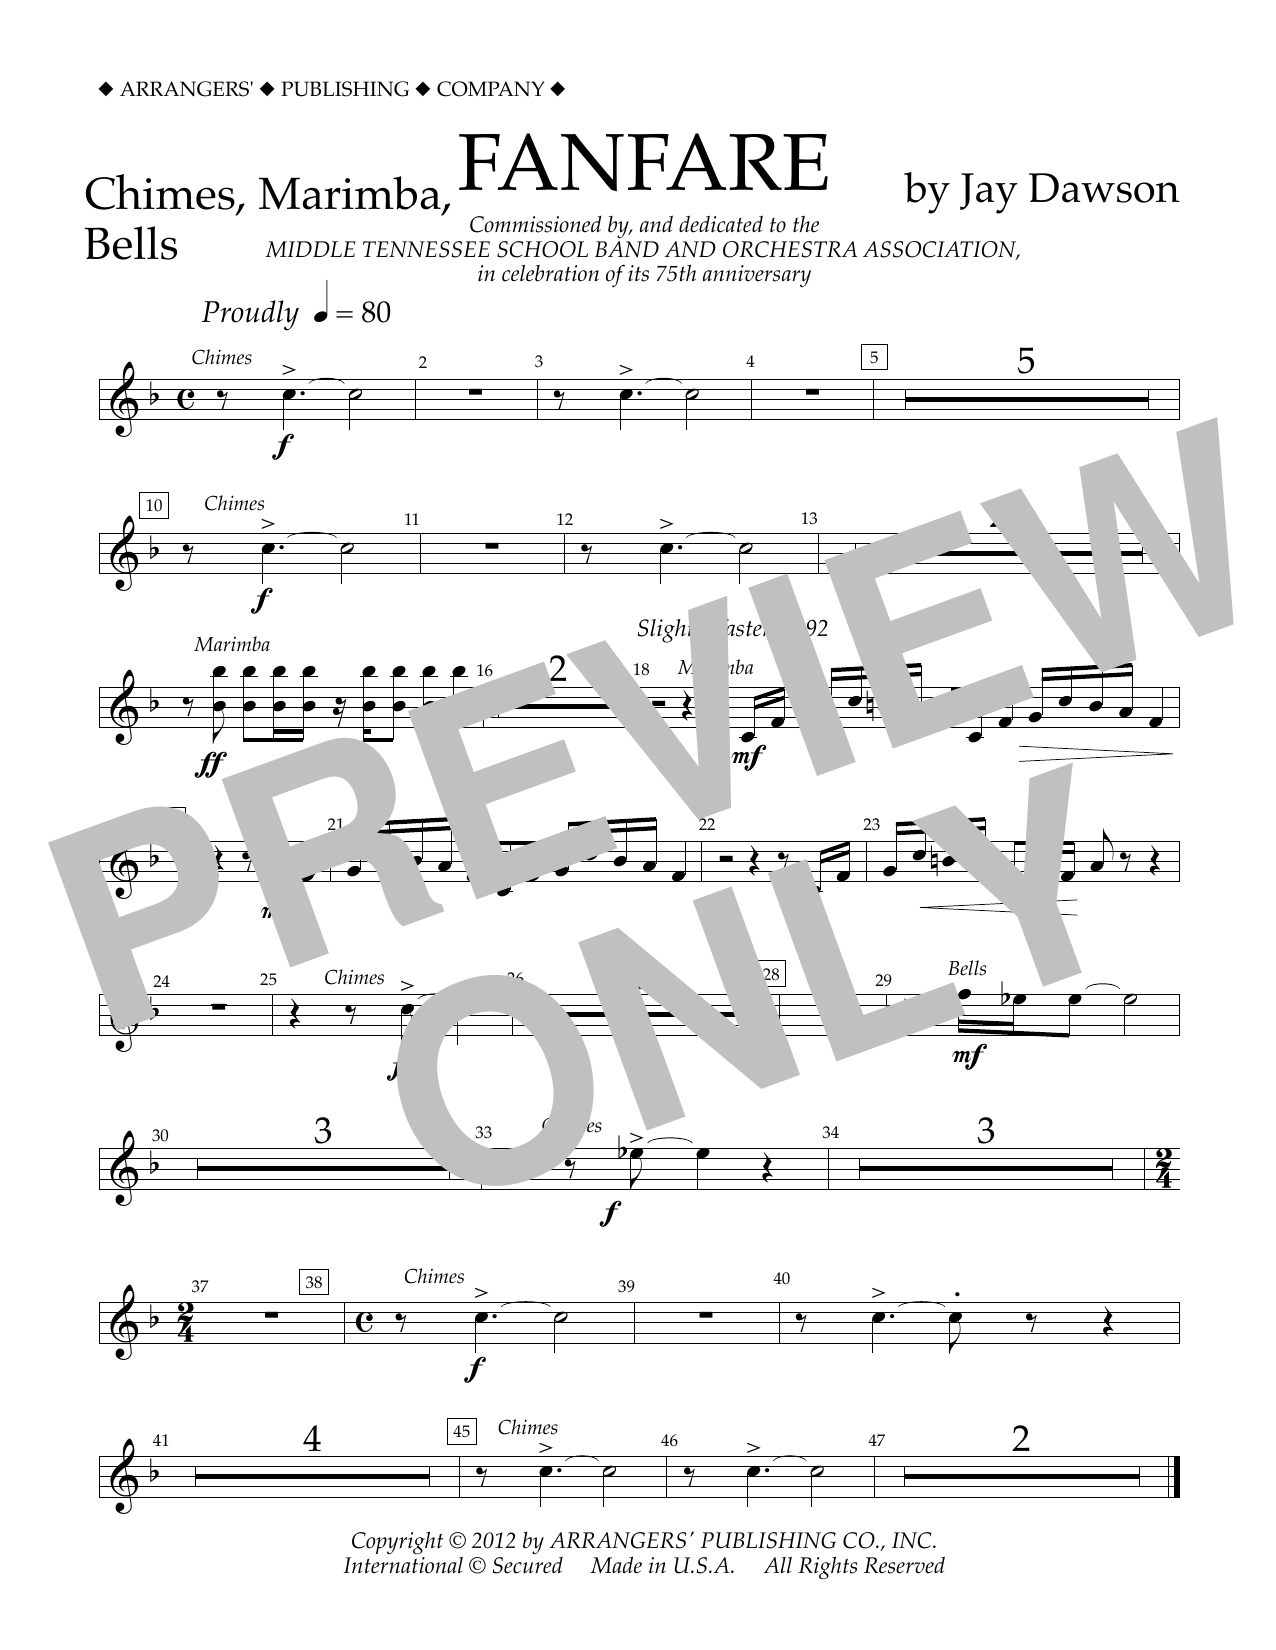 Download Jay Dawson Fanfare - Chimes, Marimba, Bells Sheet Music